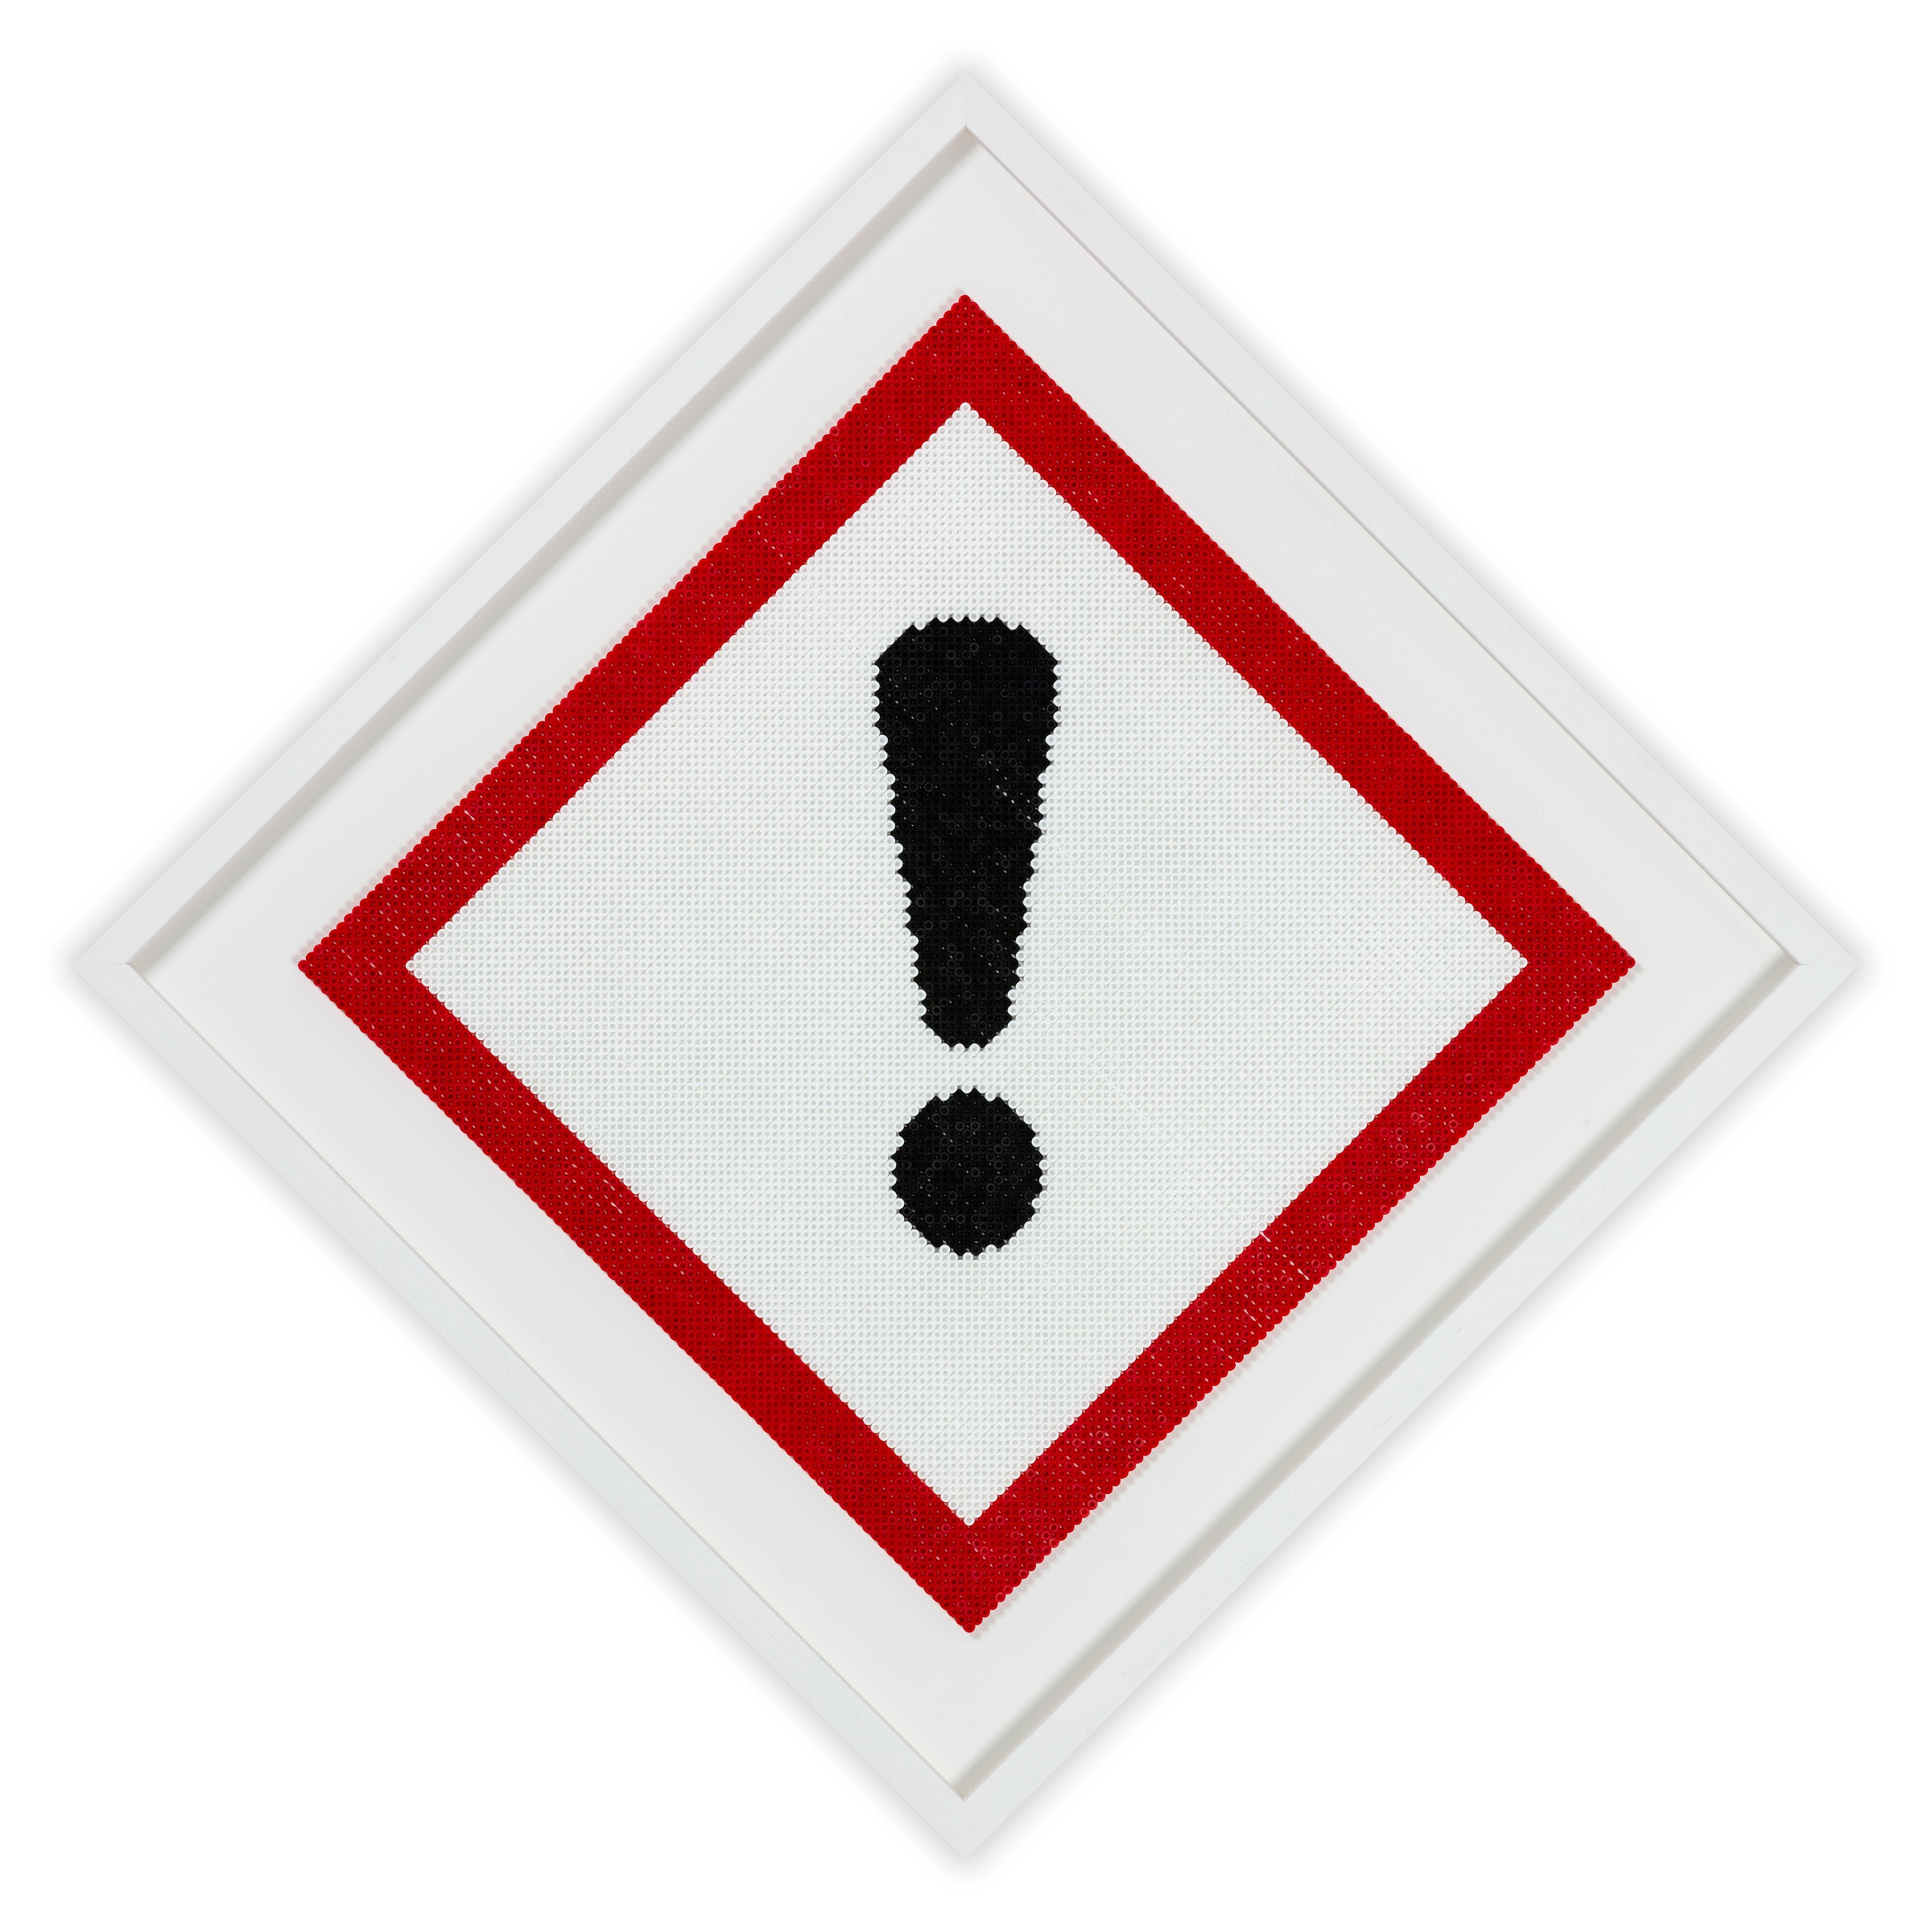 PLASTIC WARNING SIGN 1/4 – 2020